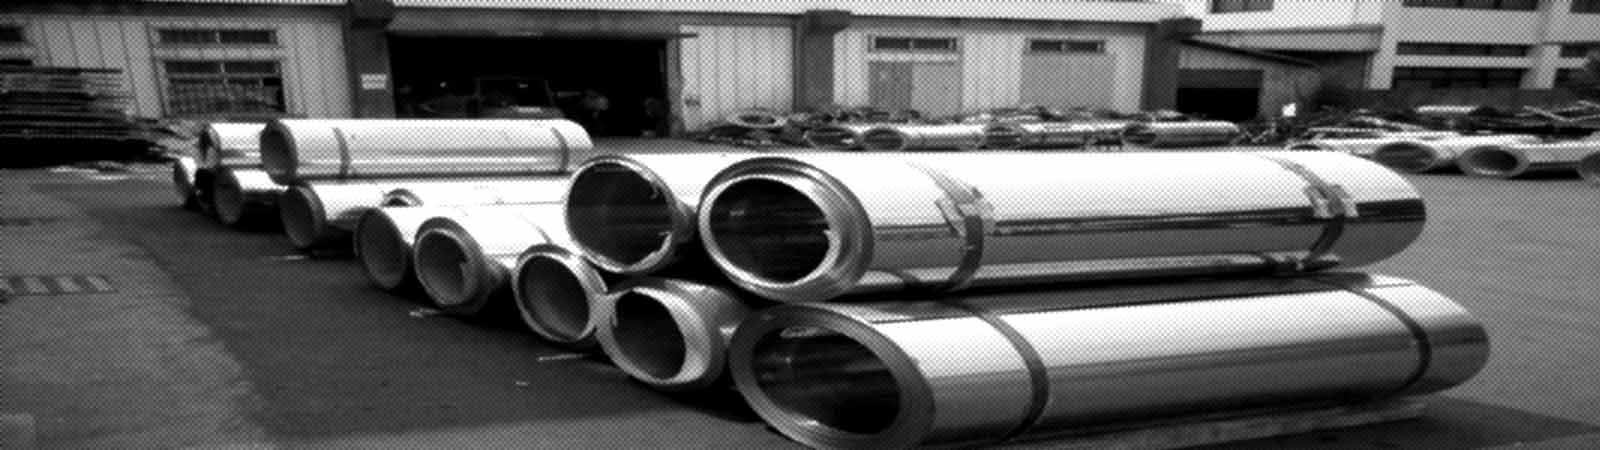 Senobar Company Stainless Steel